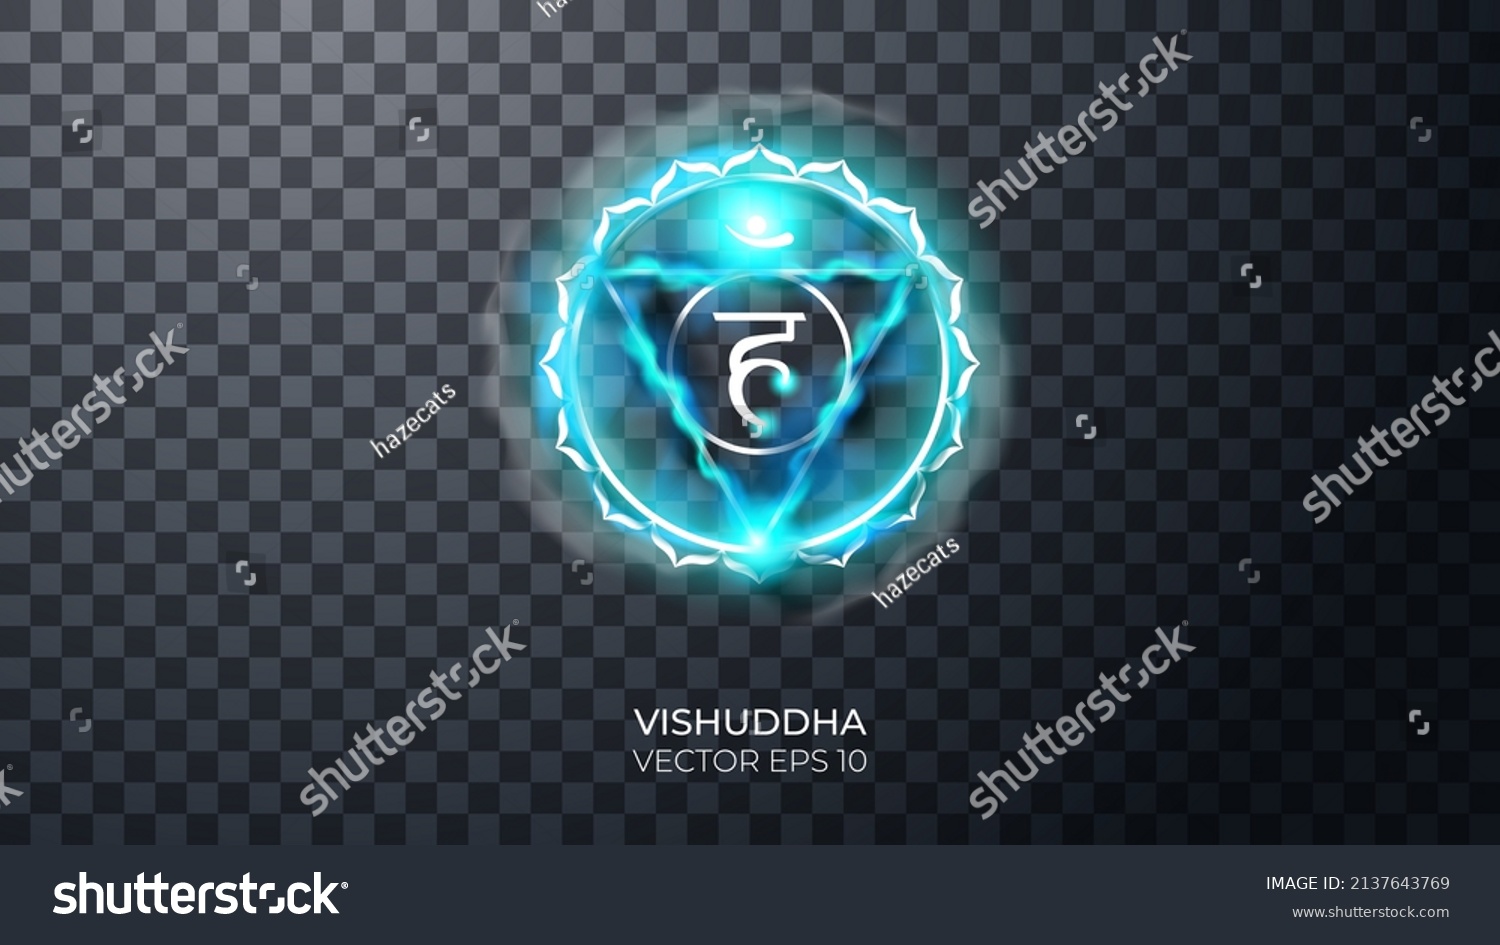 SVG of illustration of one of the seven chakras - Vishuddha, the symbol of Hinduism, Buddhism. Ethereal strange fire sign. Decor elements for magic doctor, shaman, medium. svg